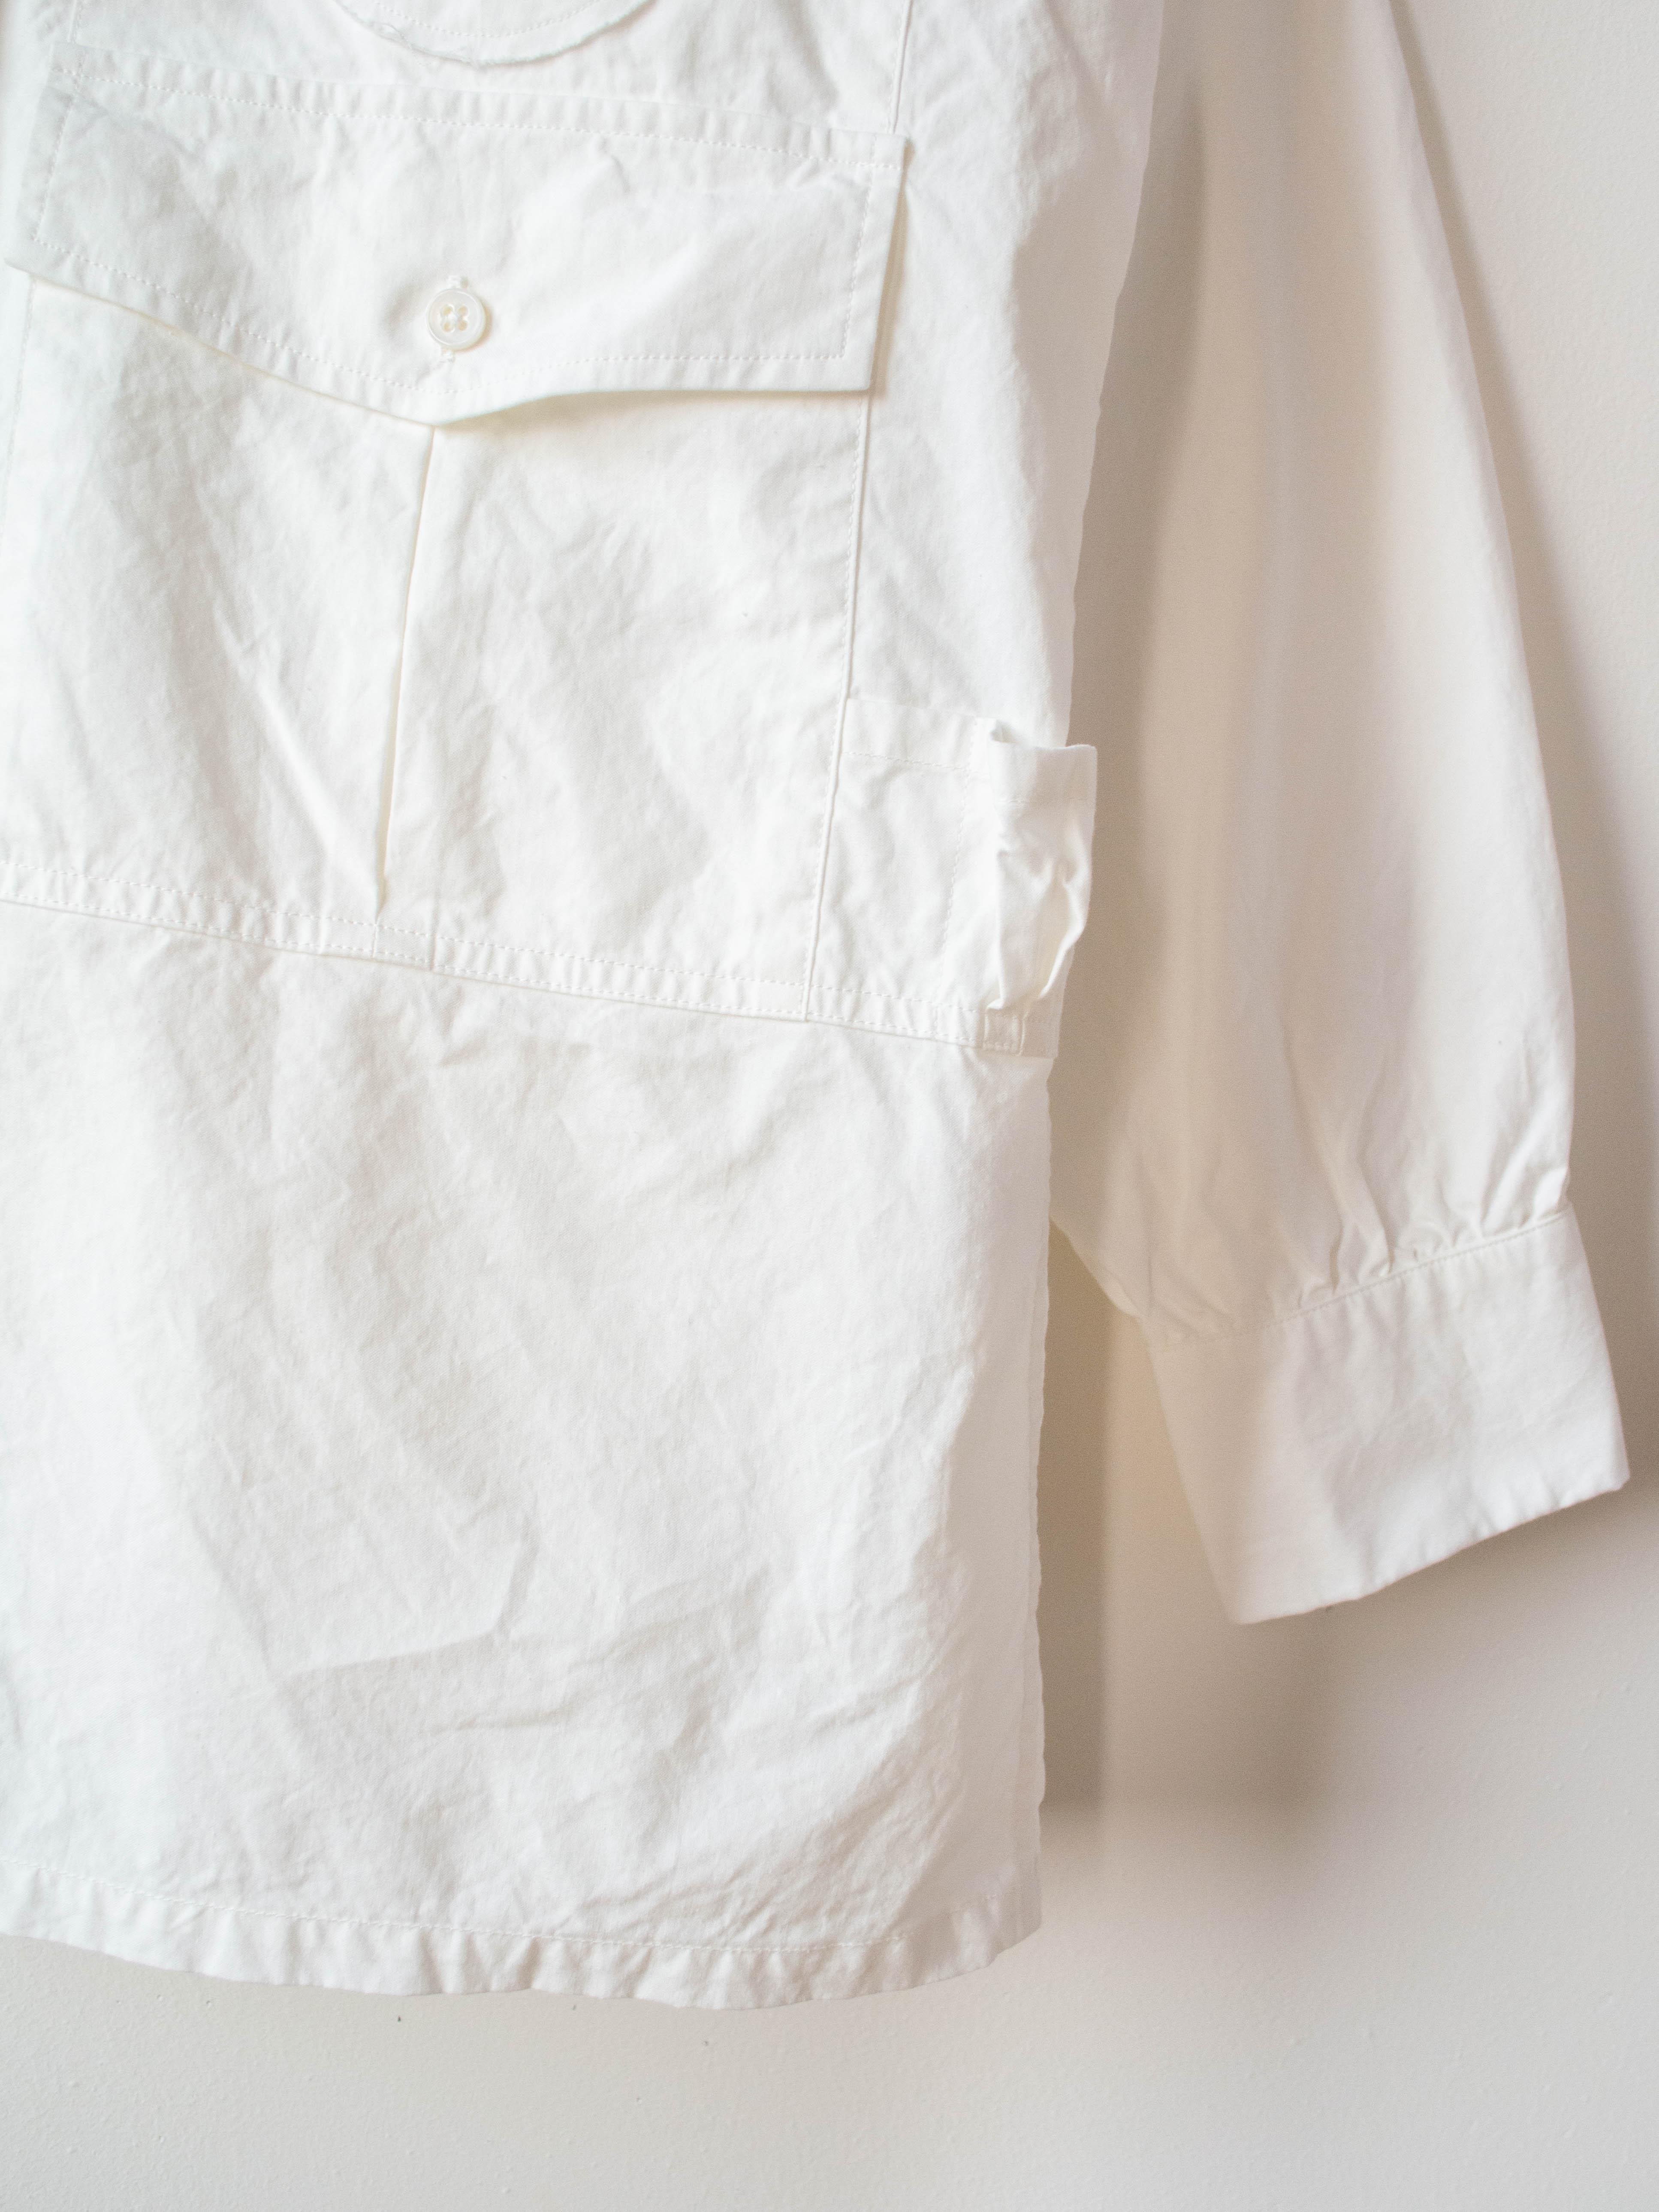 Namu Shop - S H Fishing Shirt - White